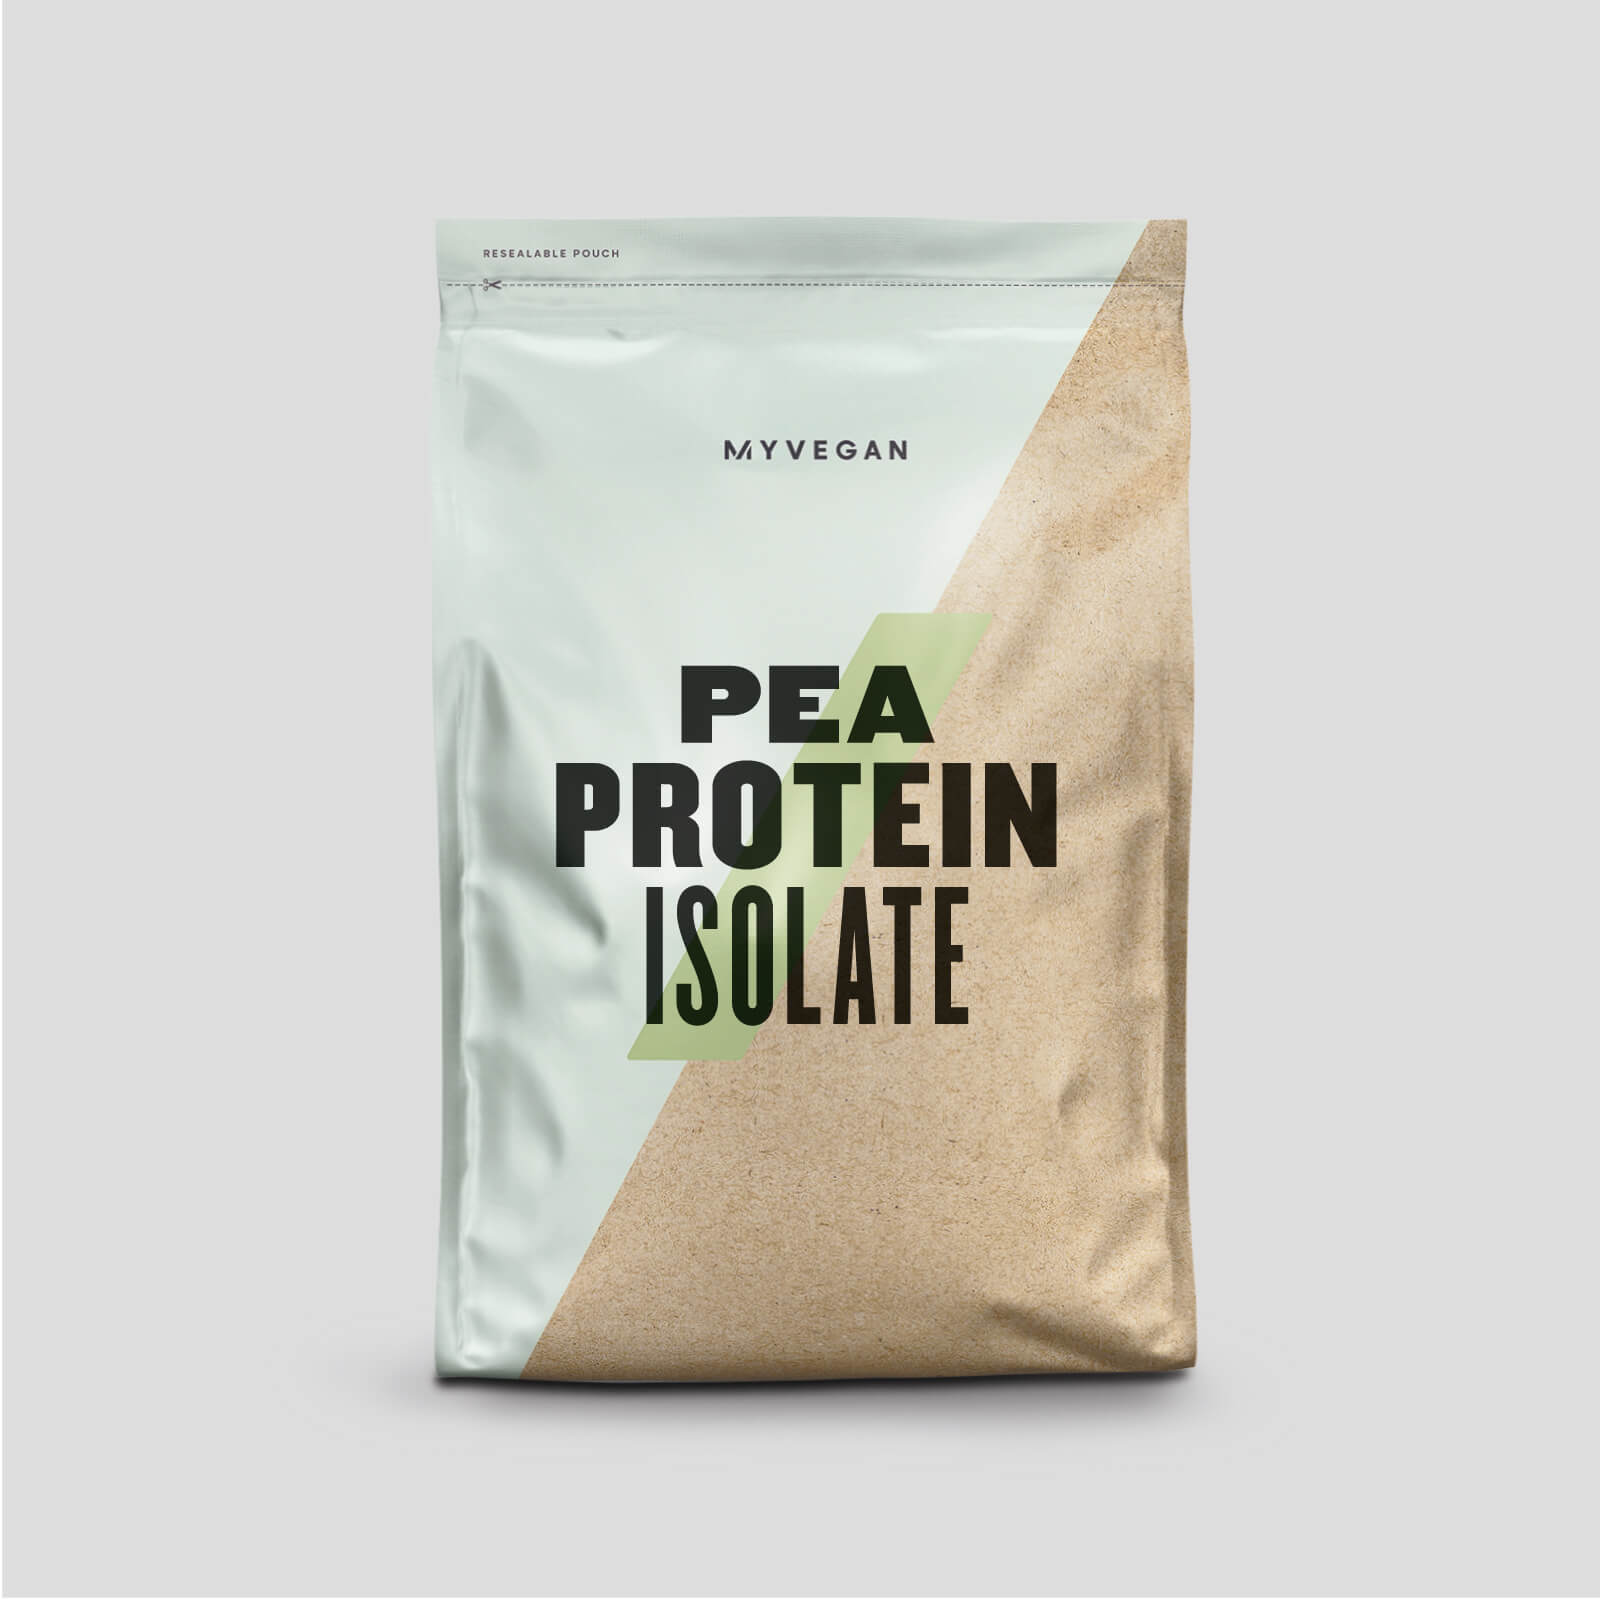 Myprotein Pea Protein Isolate - 2.5kg - Unflavoured